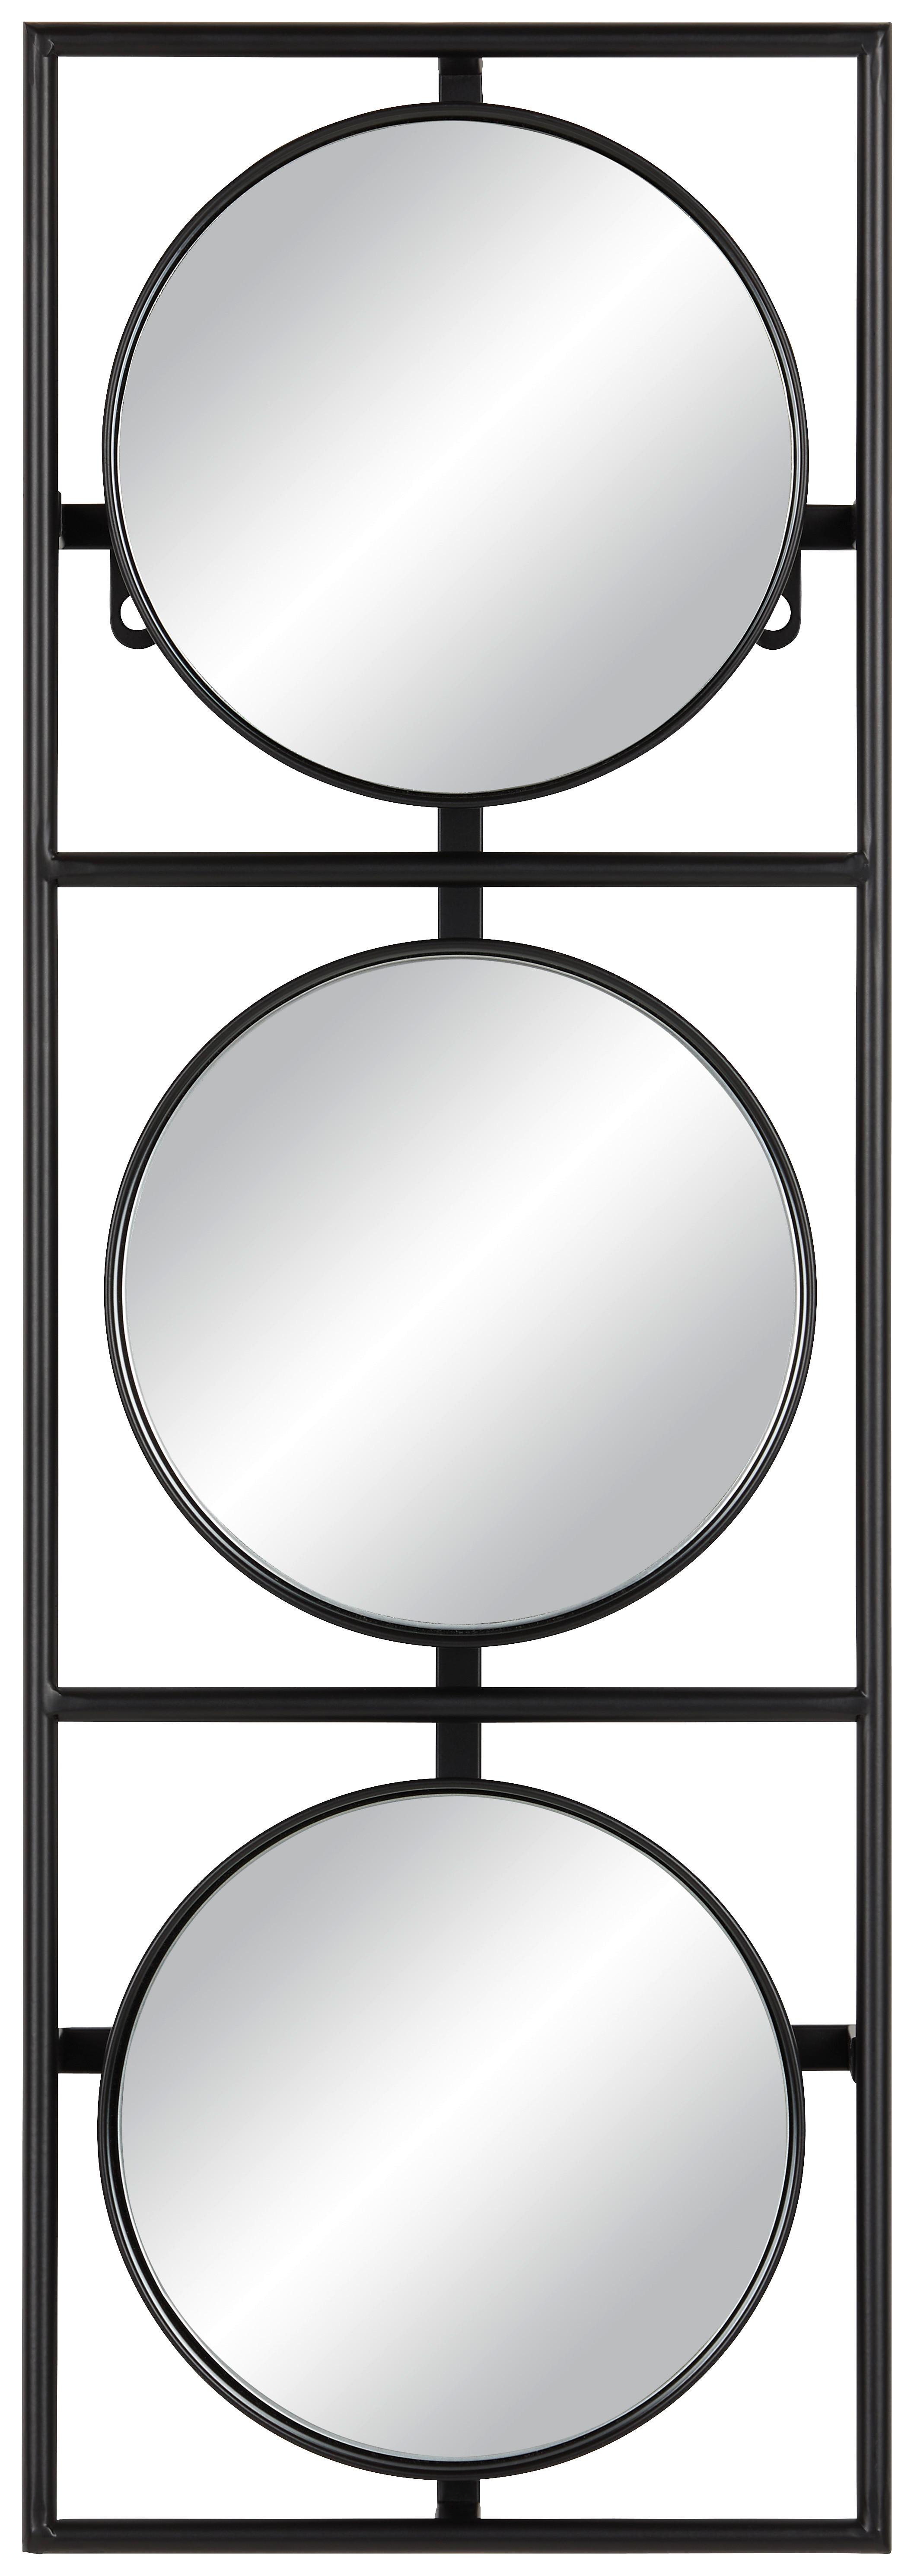 Stensko Ogledalo Maxim -Trend- - črna, Konvencionalno, kovina/steklo (24/70/8cm) - Modern Living